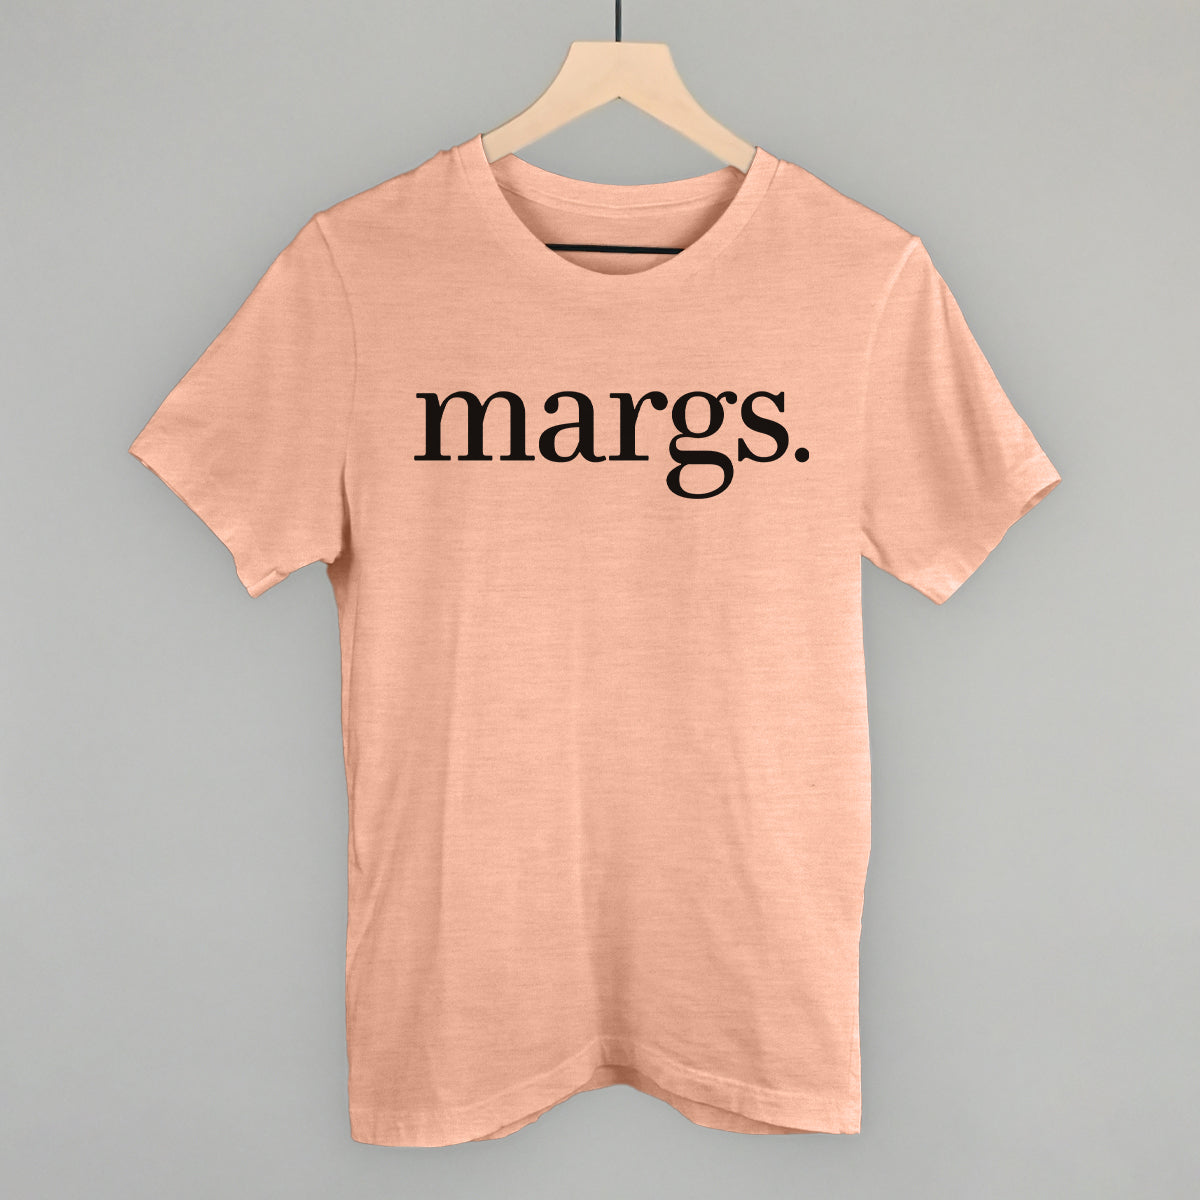 Margs (Serif)